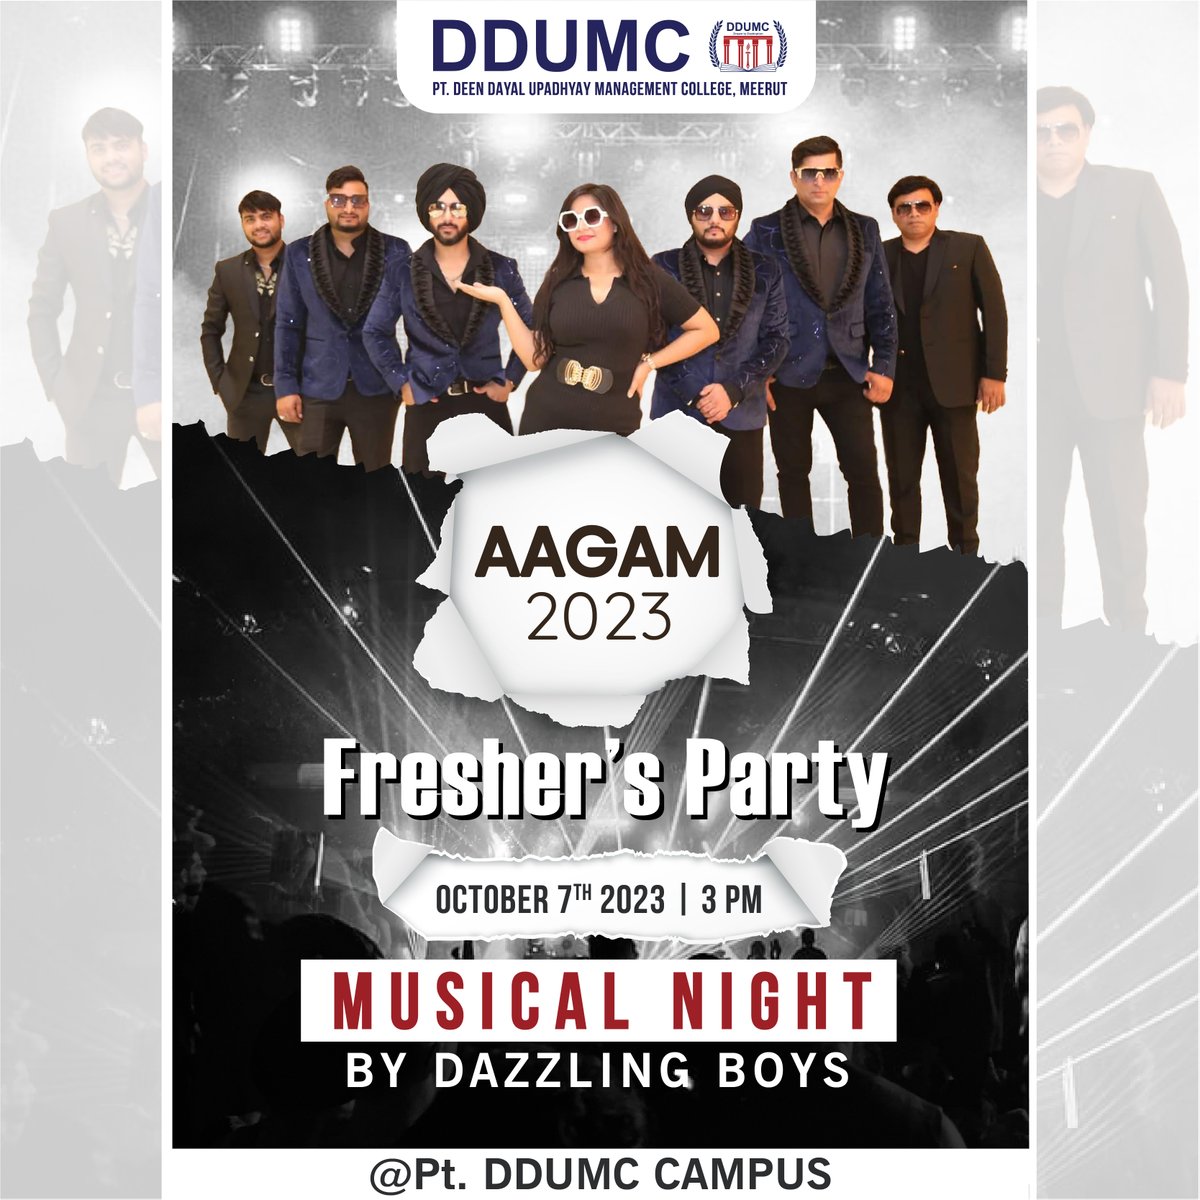 Aagam 2023
& Musical Night by Dazzling Boys

#freshers #freshersparty #newbatch #freshmen #newcomer
#partytime #paryatddumc #fresherparty #party #newcomers #weareddumcians